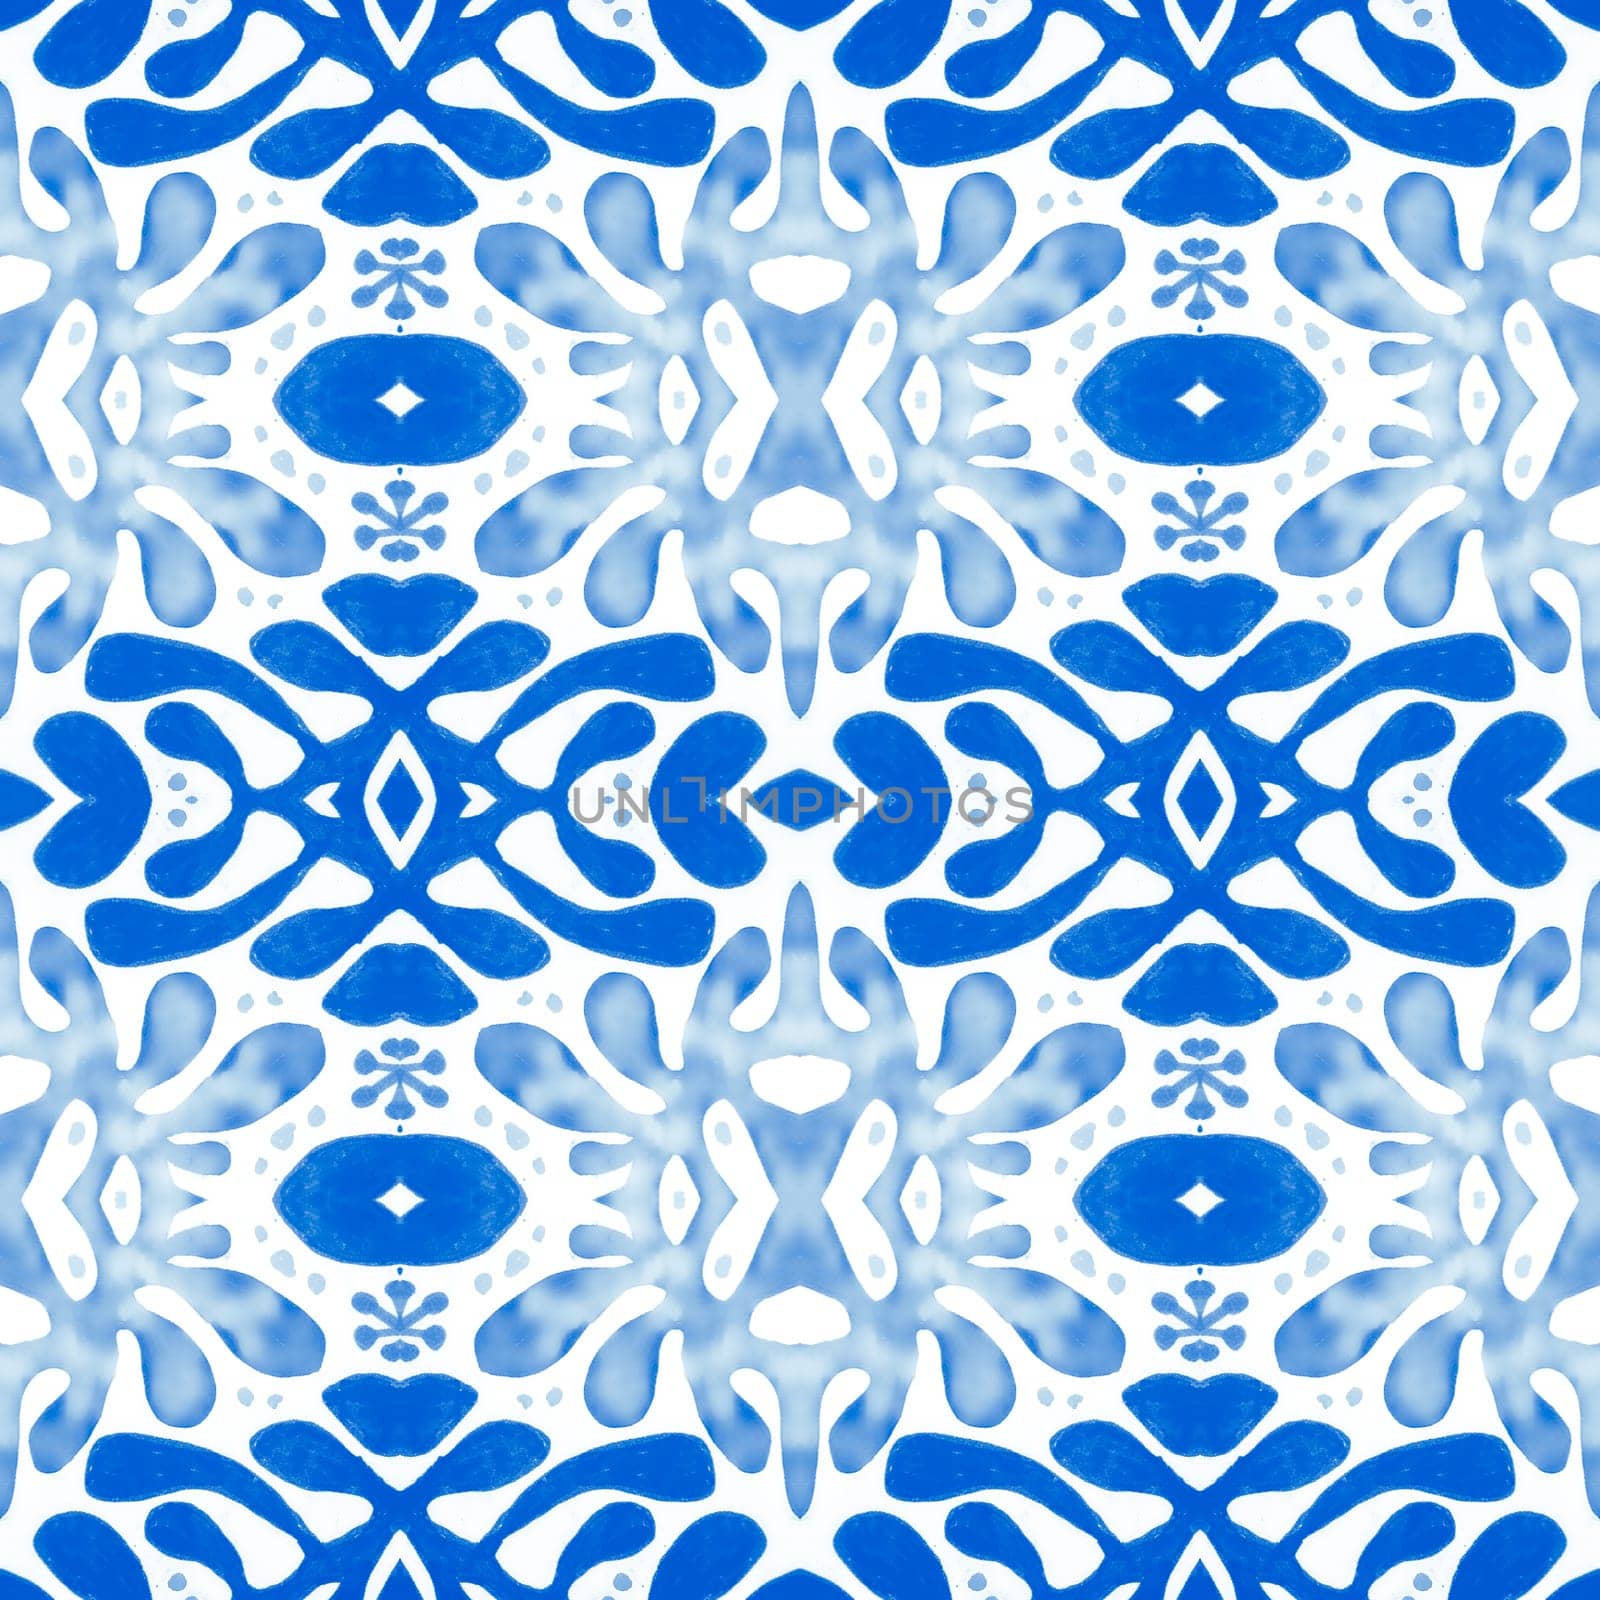 Portuguese style. Seamless talavera ceramic. Abstract spanish texture. Portuguese tile pattern. Moroccan geometric mosaic. Floral italian azulejo design. Portuguese pattern.